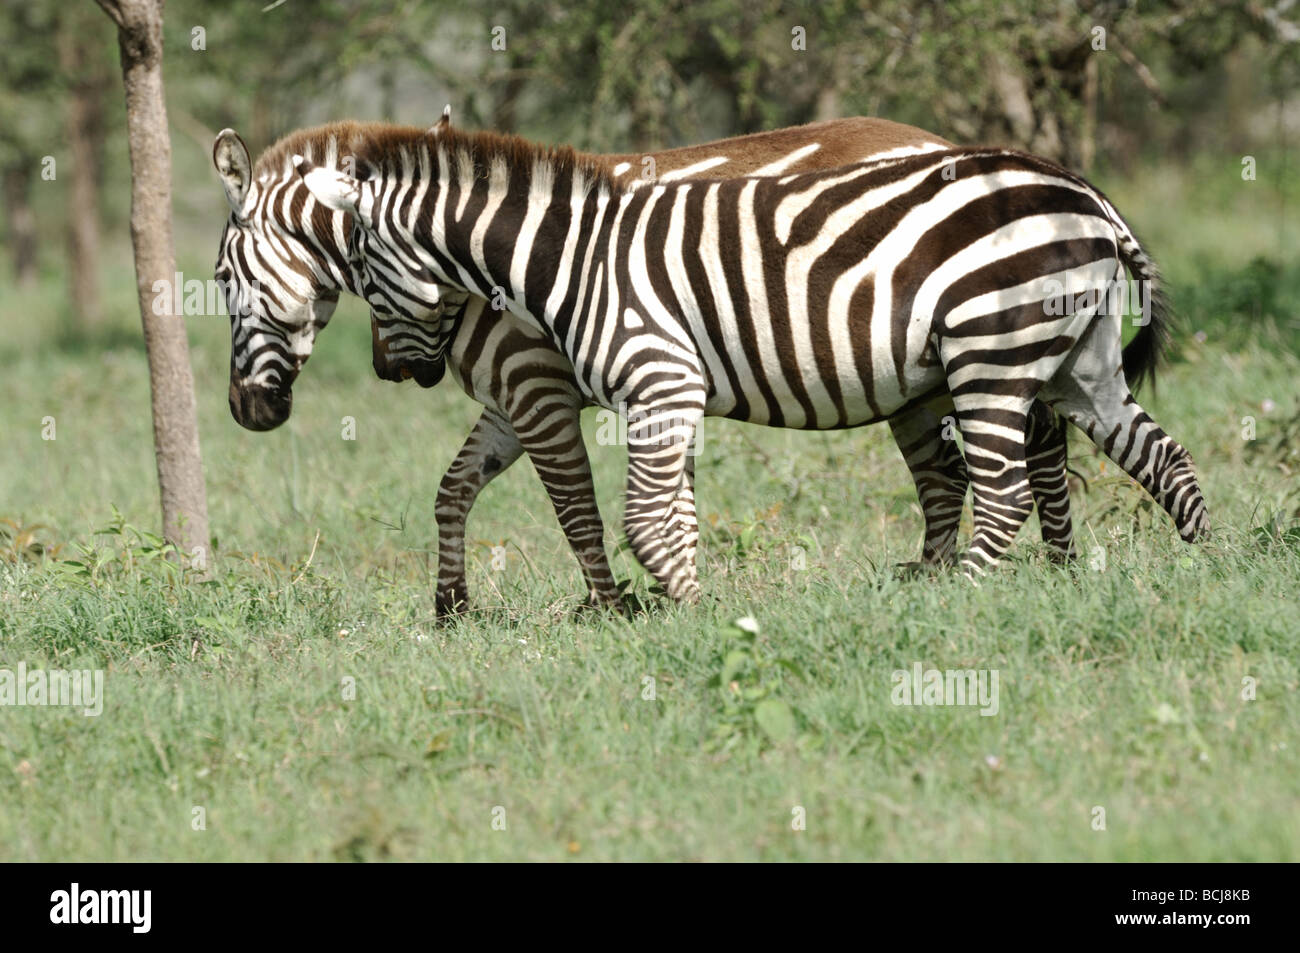 Stock photo of two zebras walking, Serengeti National Park, Tanzania, 2009. Stock Photo